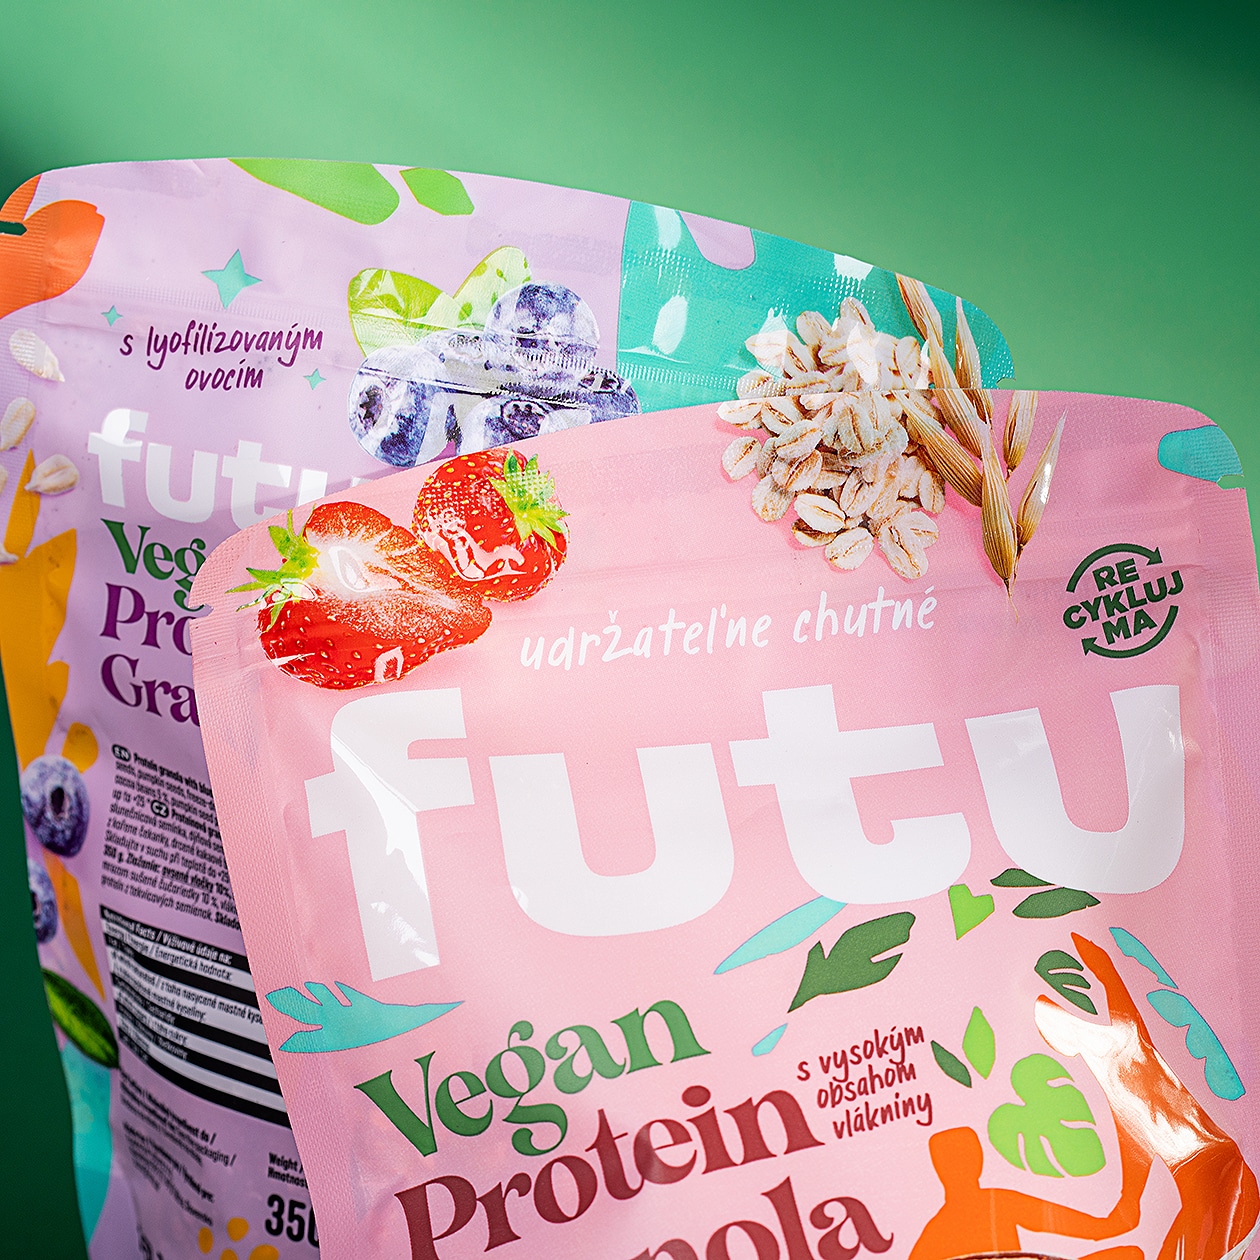 packaging futu vegan protein granola